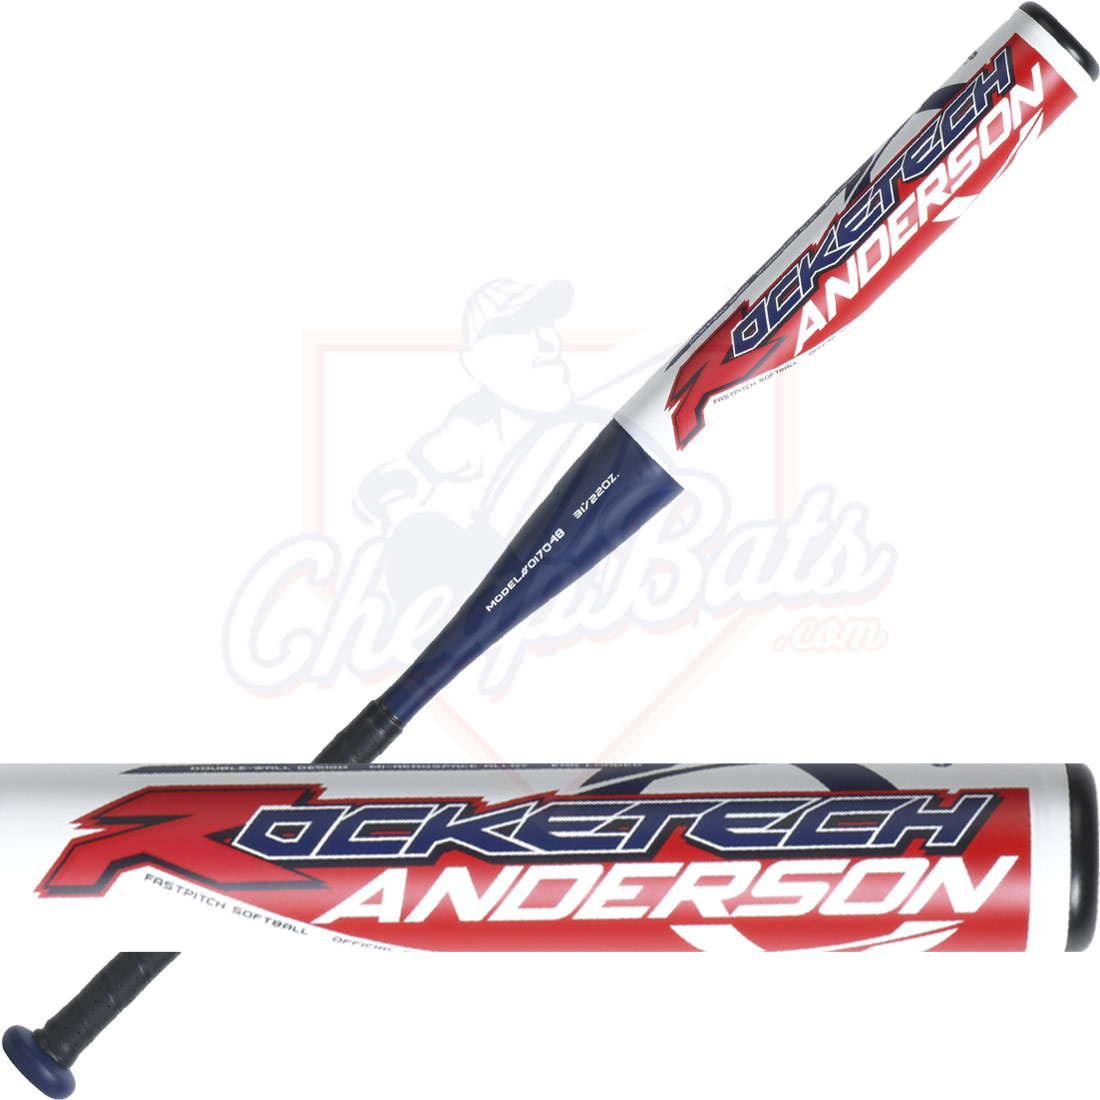 2021 Anderson RockeTech Fastpitch Softball Bat -9oz 017048